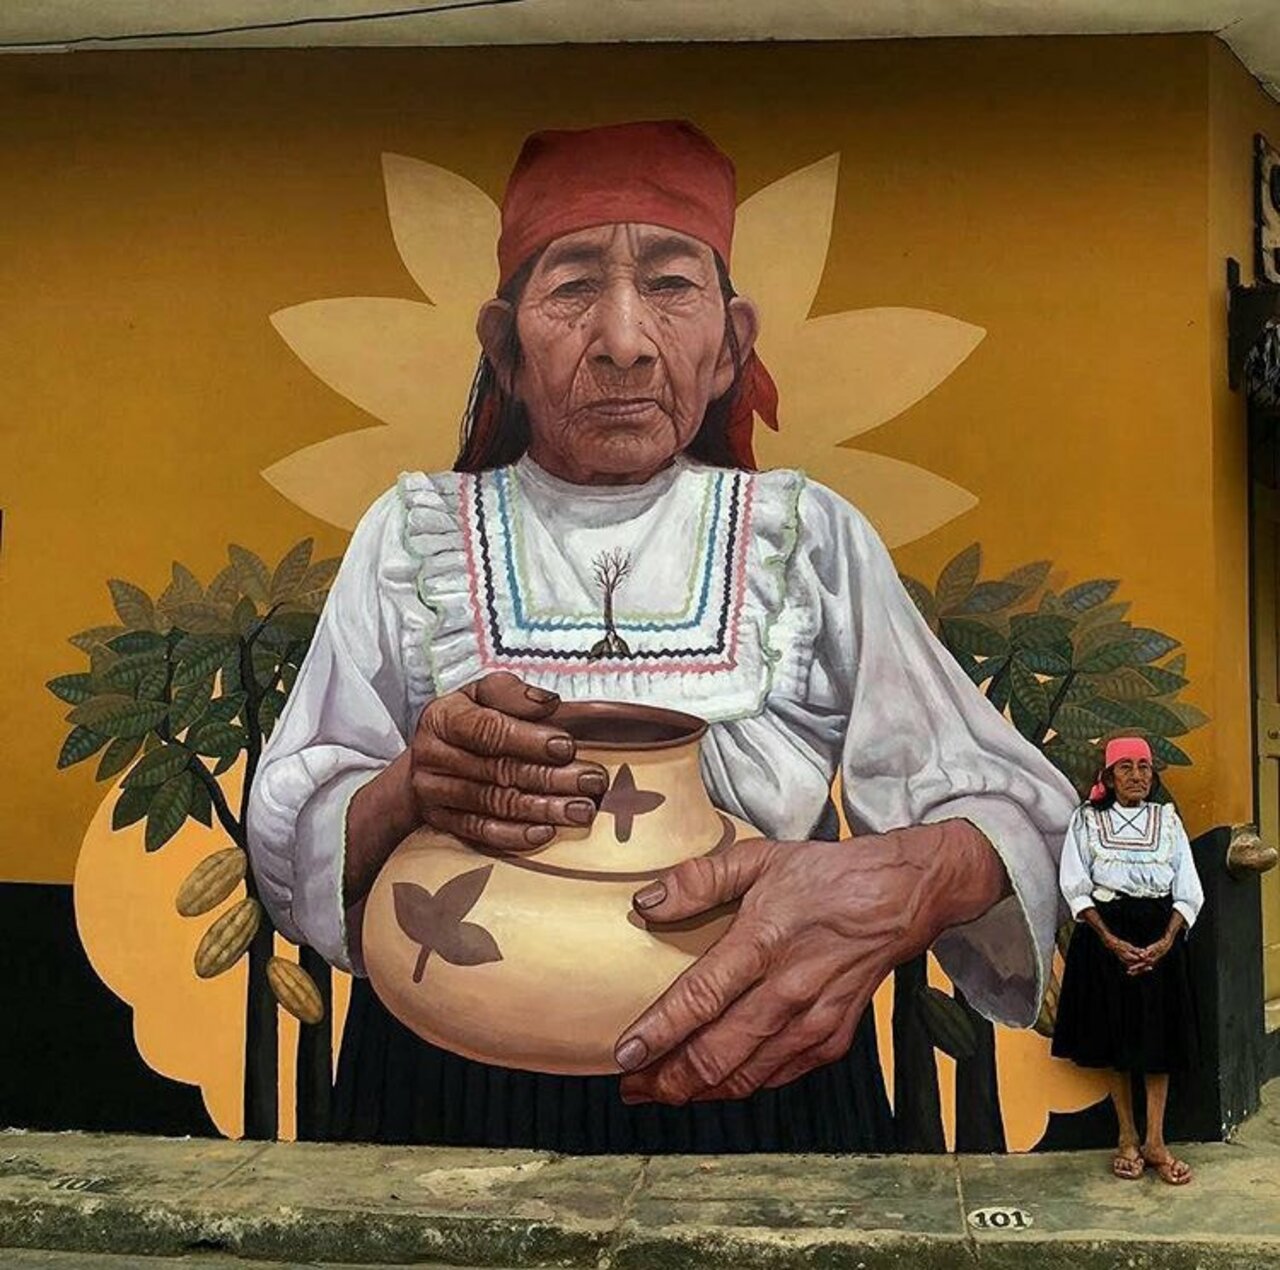 New Street Art by Daniel Cortez found in Lamas Peru #art #graffiti #mural #streetart https://t.co/GXhOYGncna